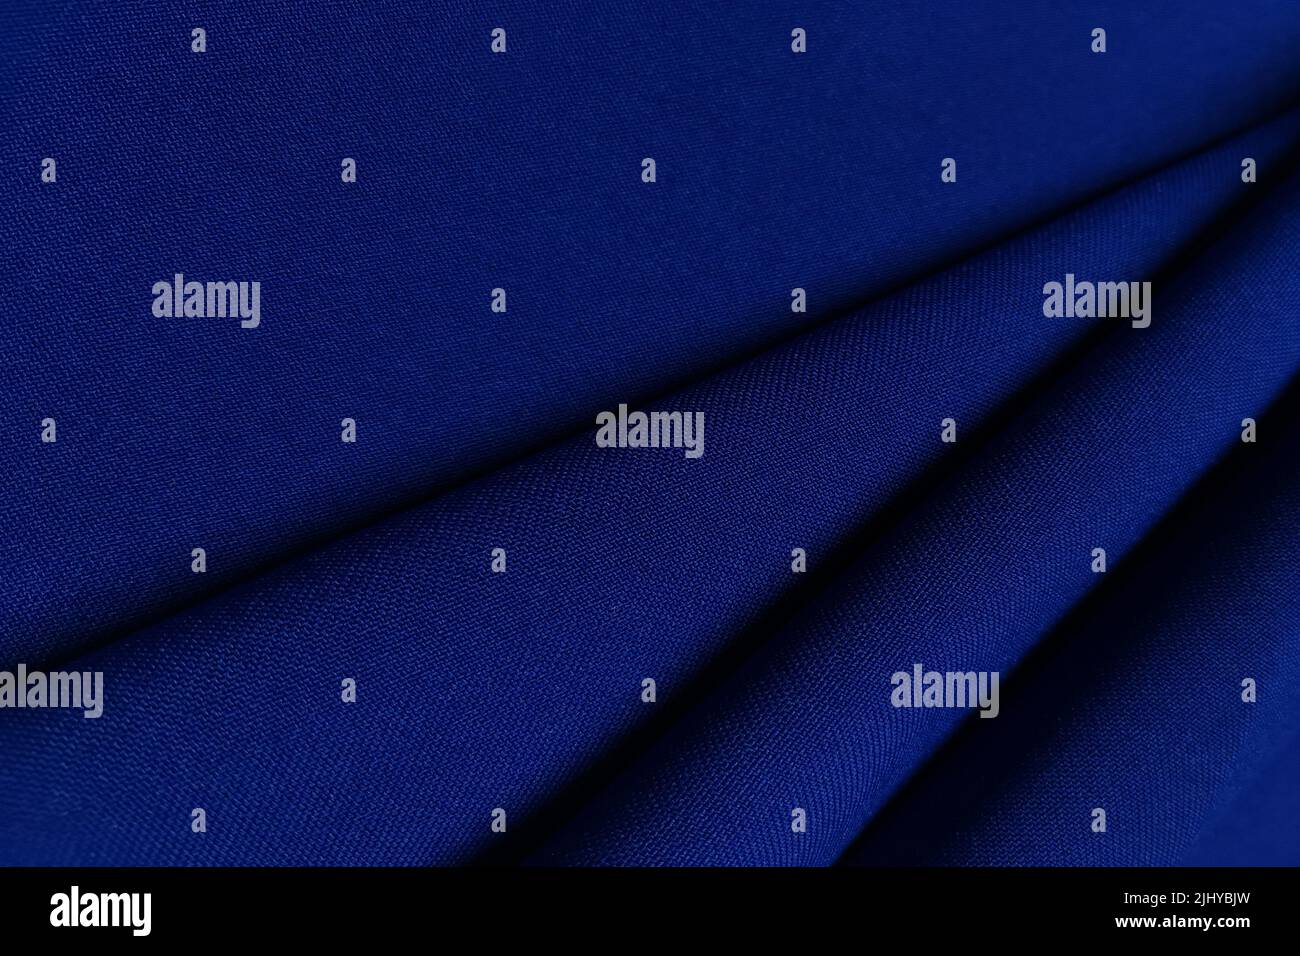 Blue crumpled or wavy fabric texture background. Abstract linen cloth soft waves. Gabardine wool fabric. Merino yarn. Smooth elegant luxury cloth Stock Photo